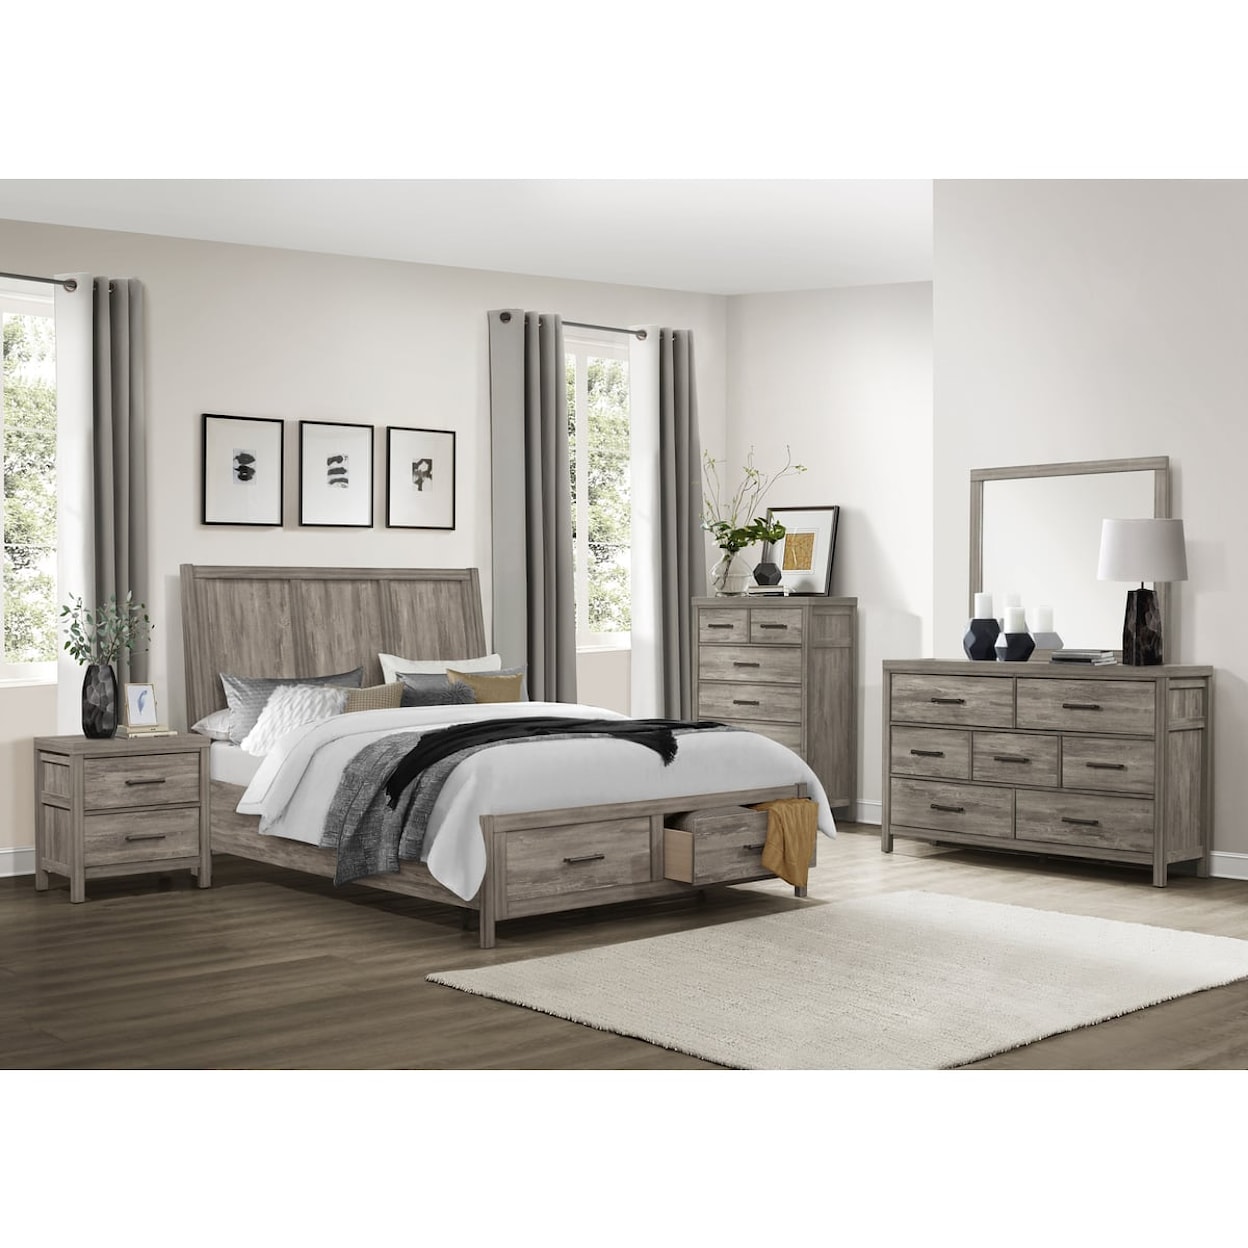 Homelegance Furniture Bainbridge Queen Bed with Storage